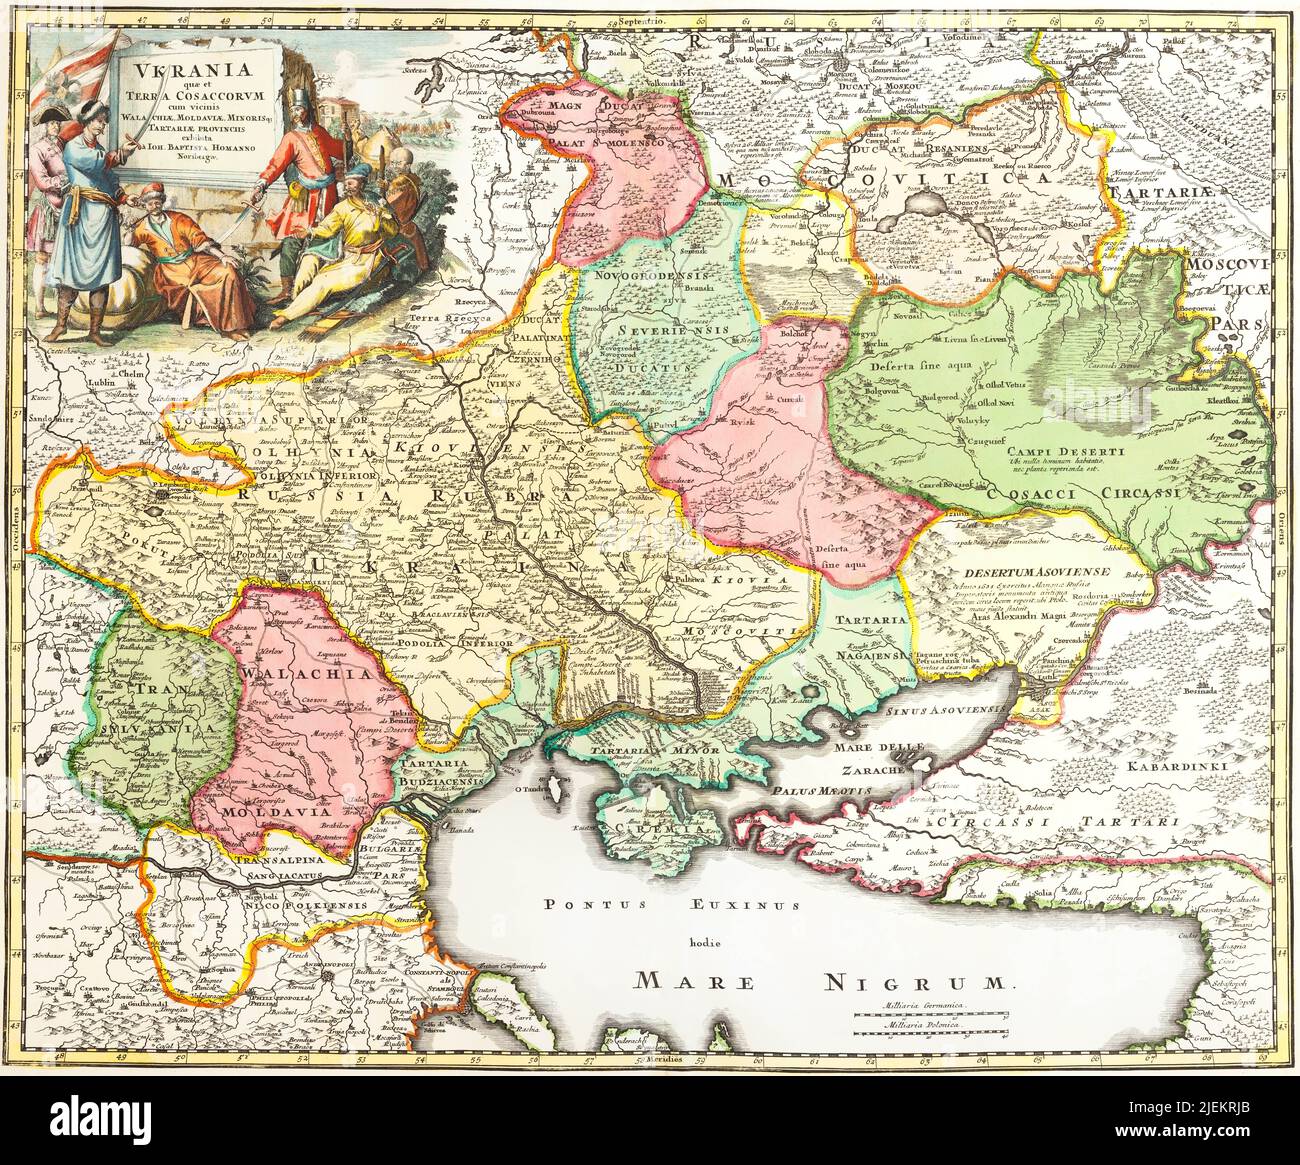 Map of the Black Sea Region by Johann Baptist Homann, 1720 Stock Photo